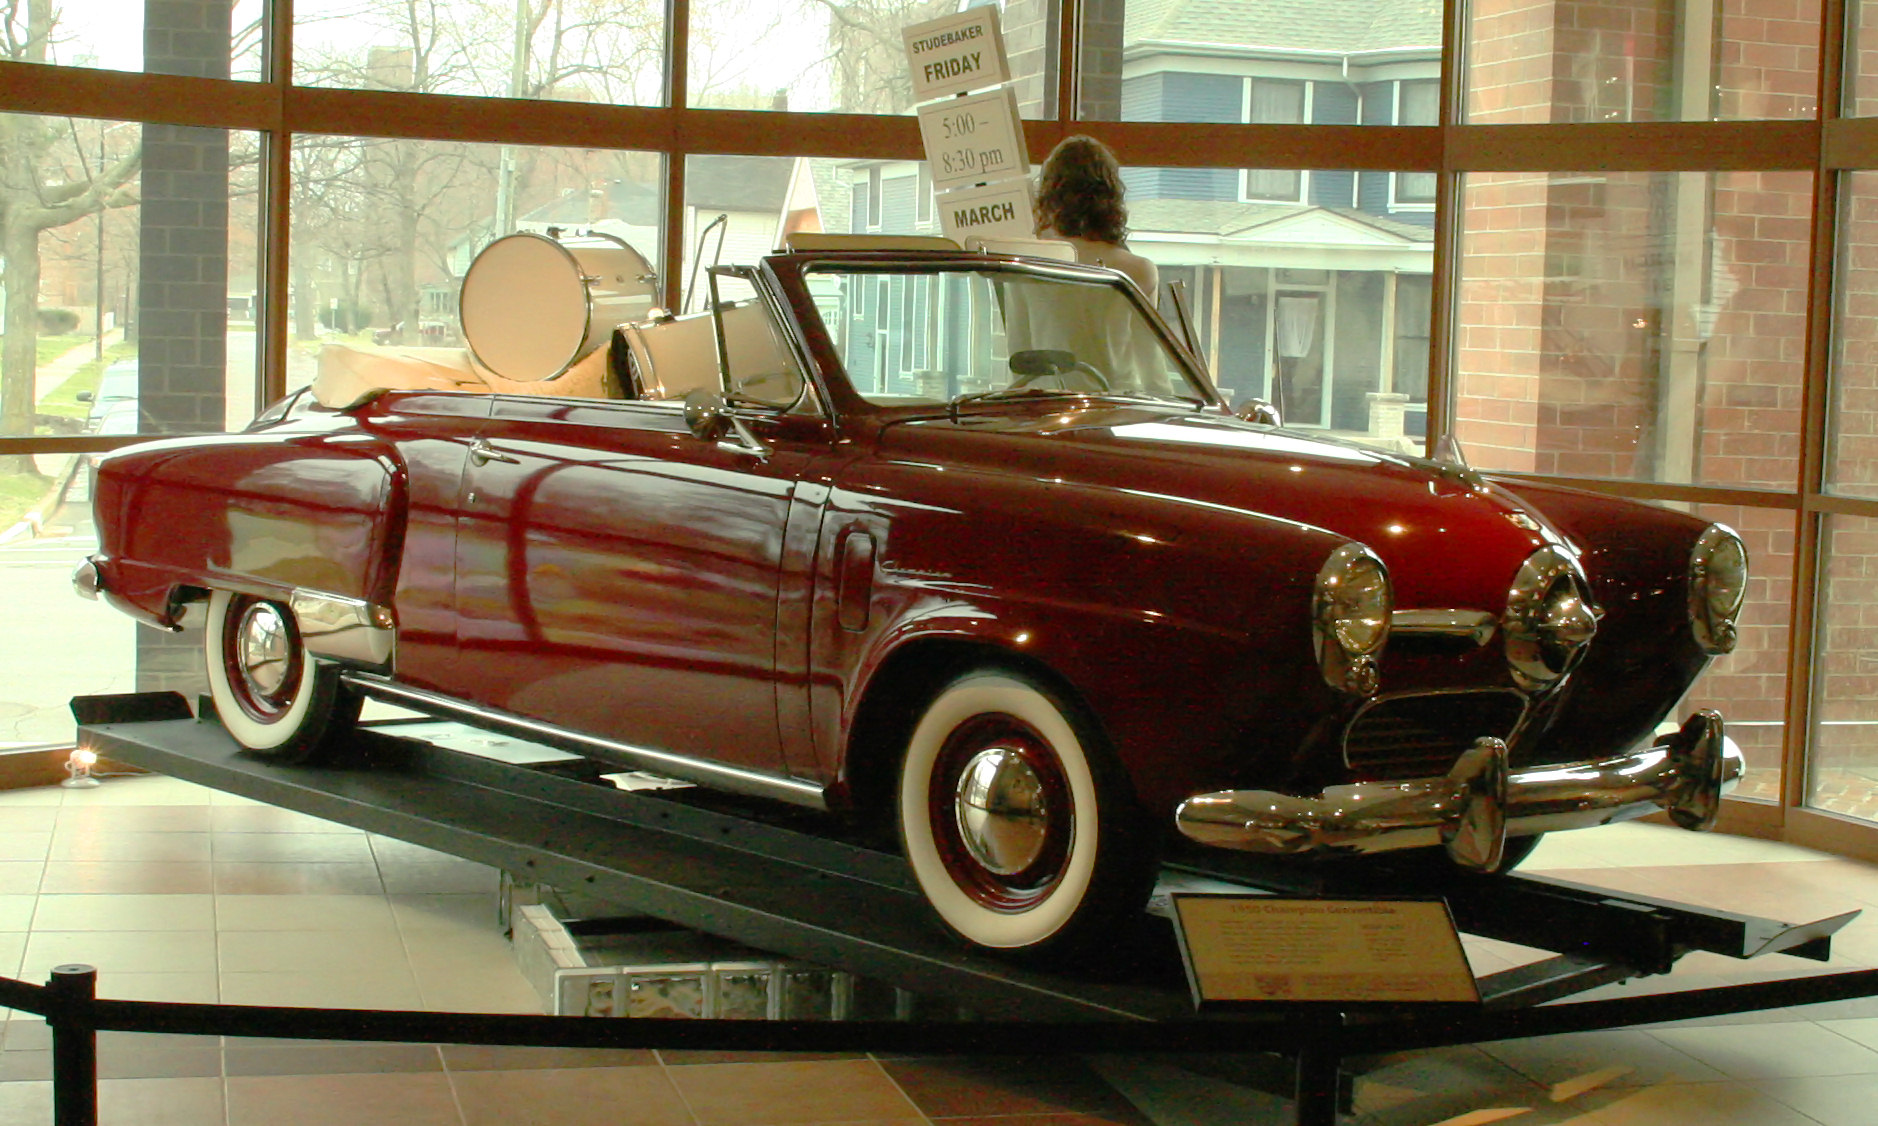 File:Studebaker-champion-convertible-1950.jpg - Wikimedia Commons